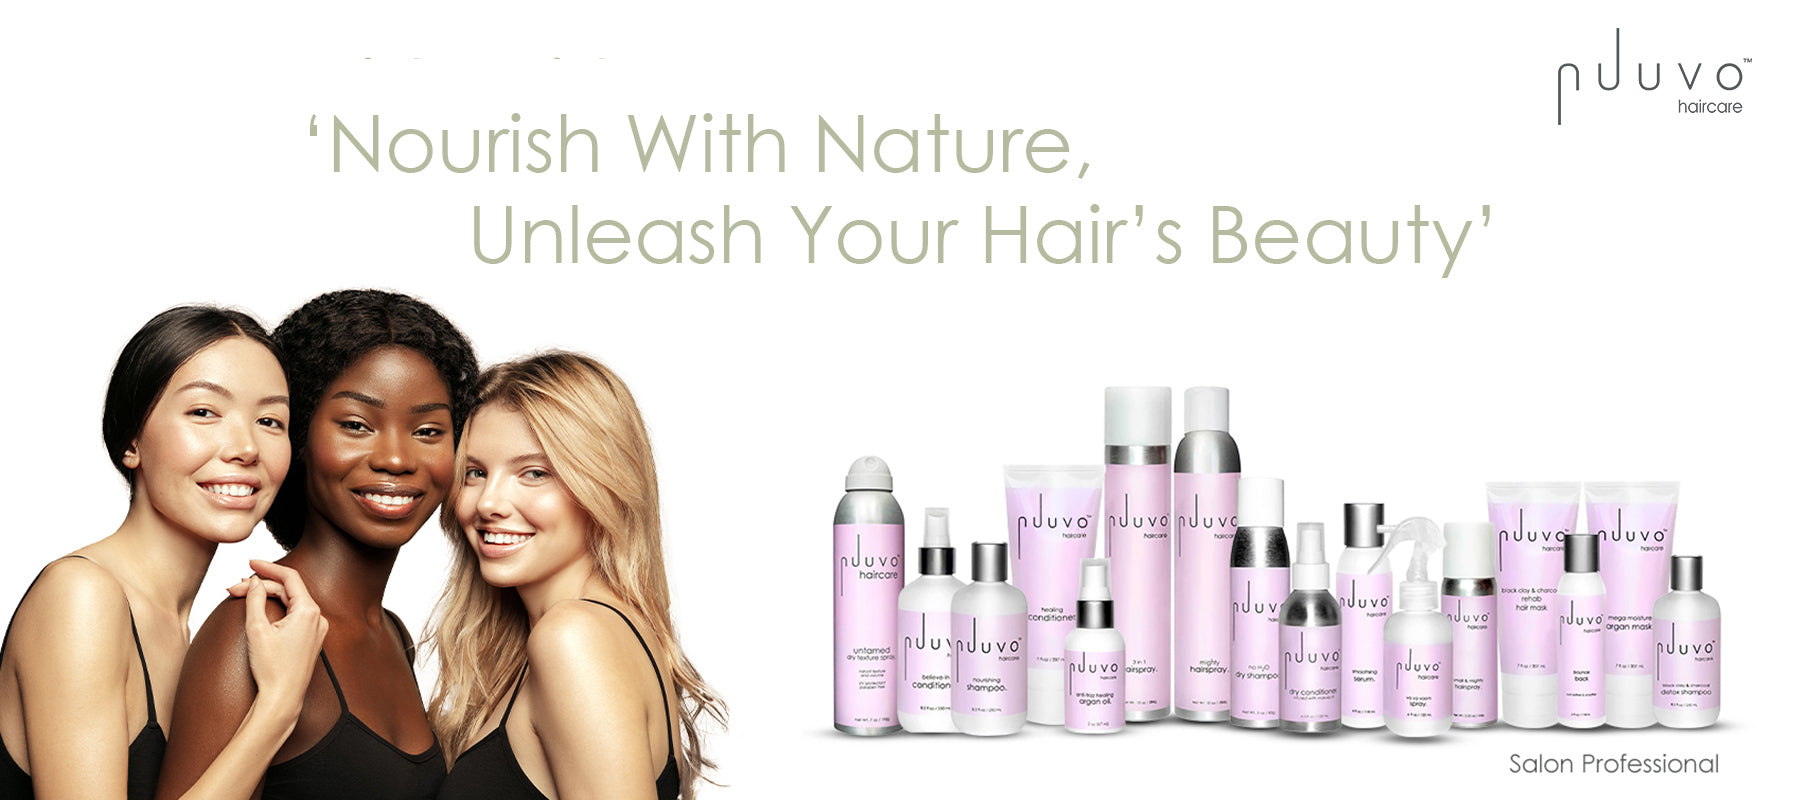 Nuuvo Haircare Untamed Dry Texture Spray for Hair - 7oz, Professional  Salon-Quality Texturizing Spray for Volume & Fullness, Use as Dry Shampoo  for